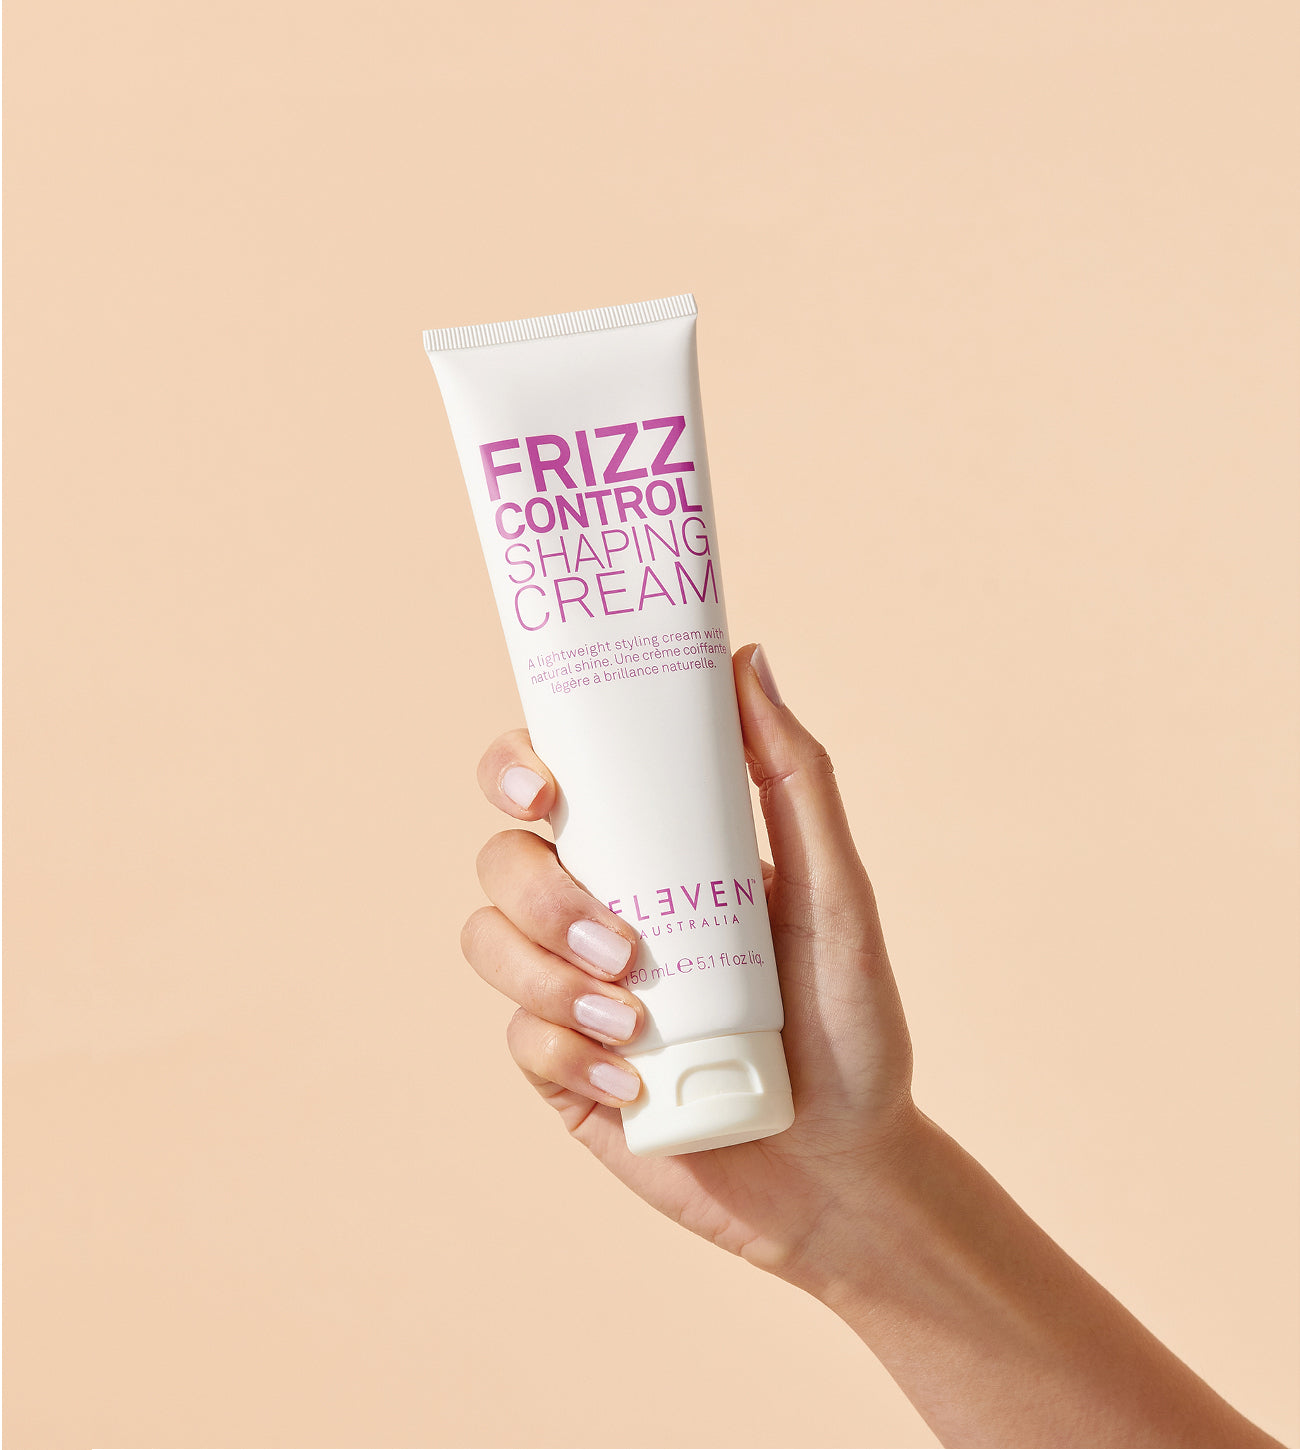 Frizz Control Shaping Cream 150 ml